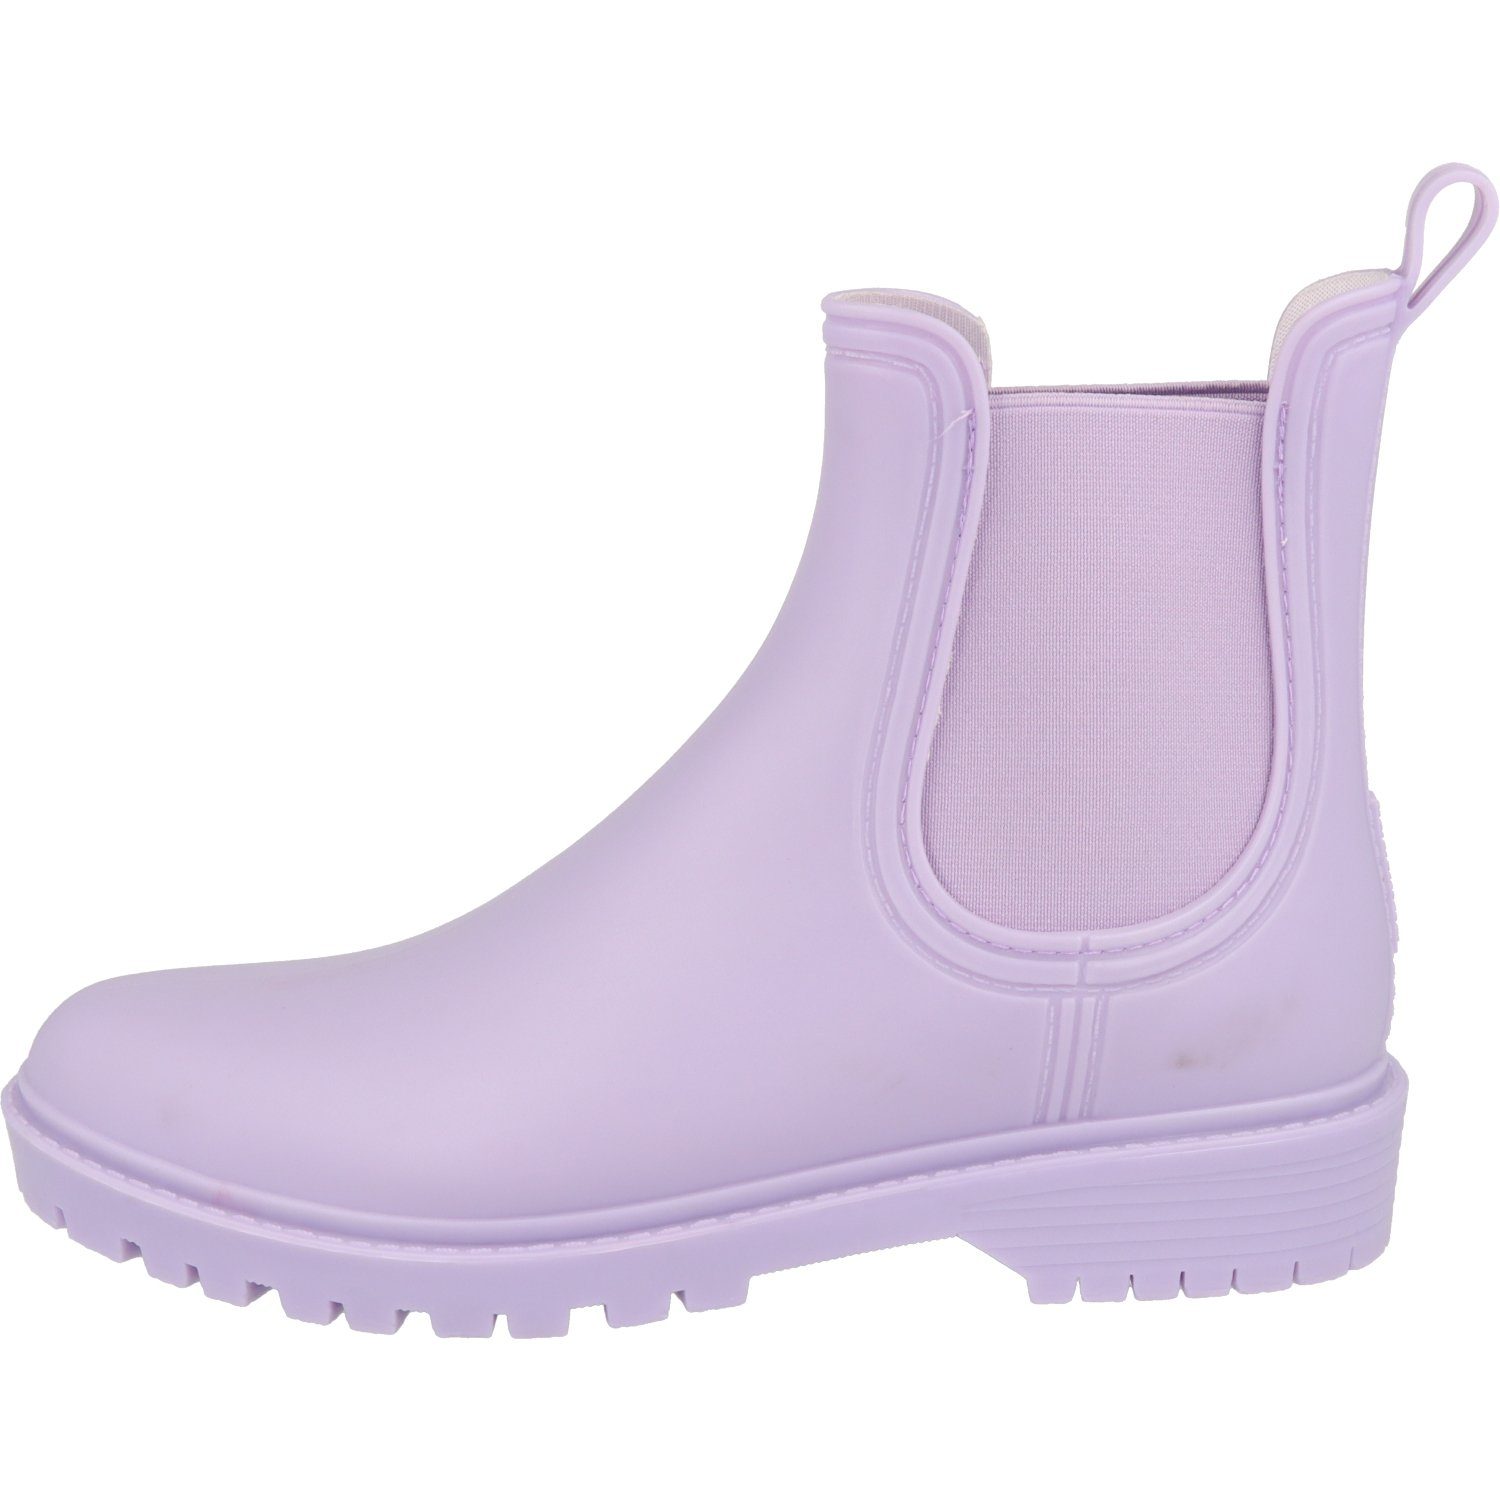 Damen Gerli Gummistiefelette Wasserdicht Schuhe Violett by 51ME201 Wasserdicht Dockers Chelsea